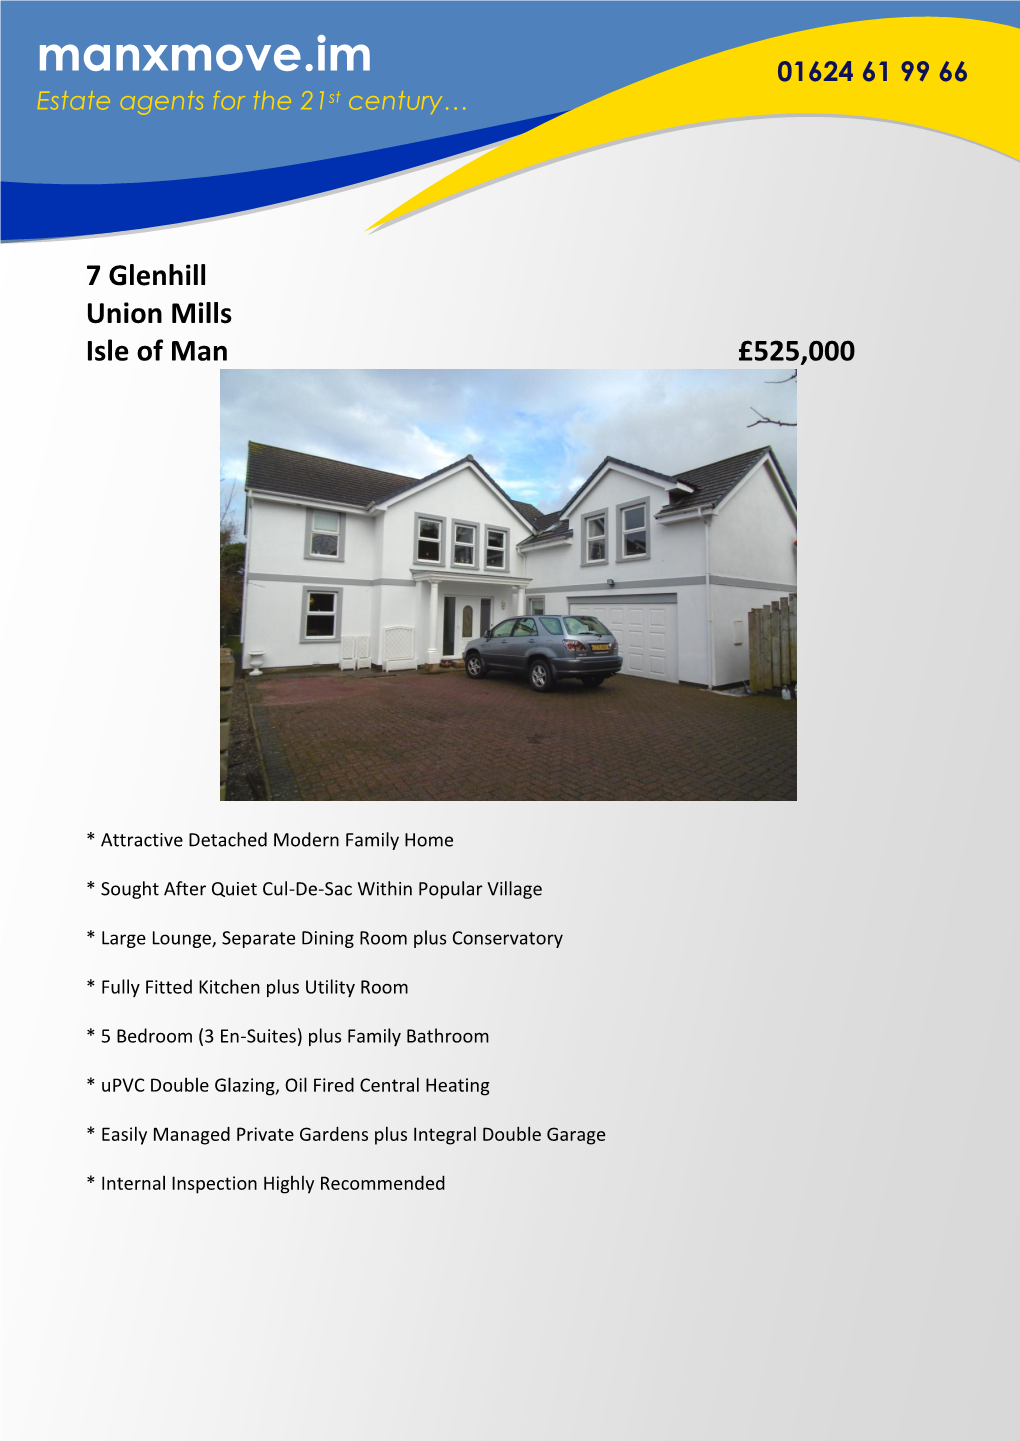 7 Glenhill Union Mills Isle of Man £525,000